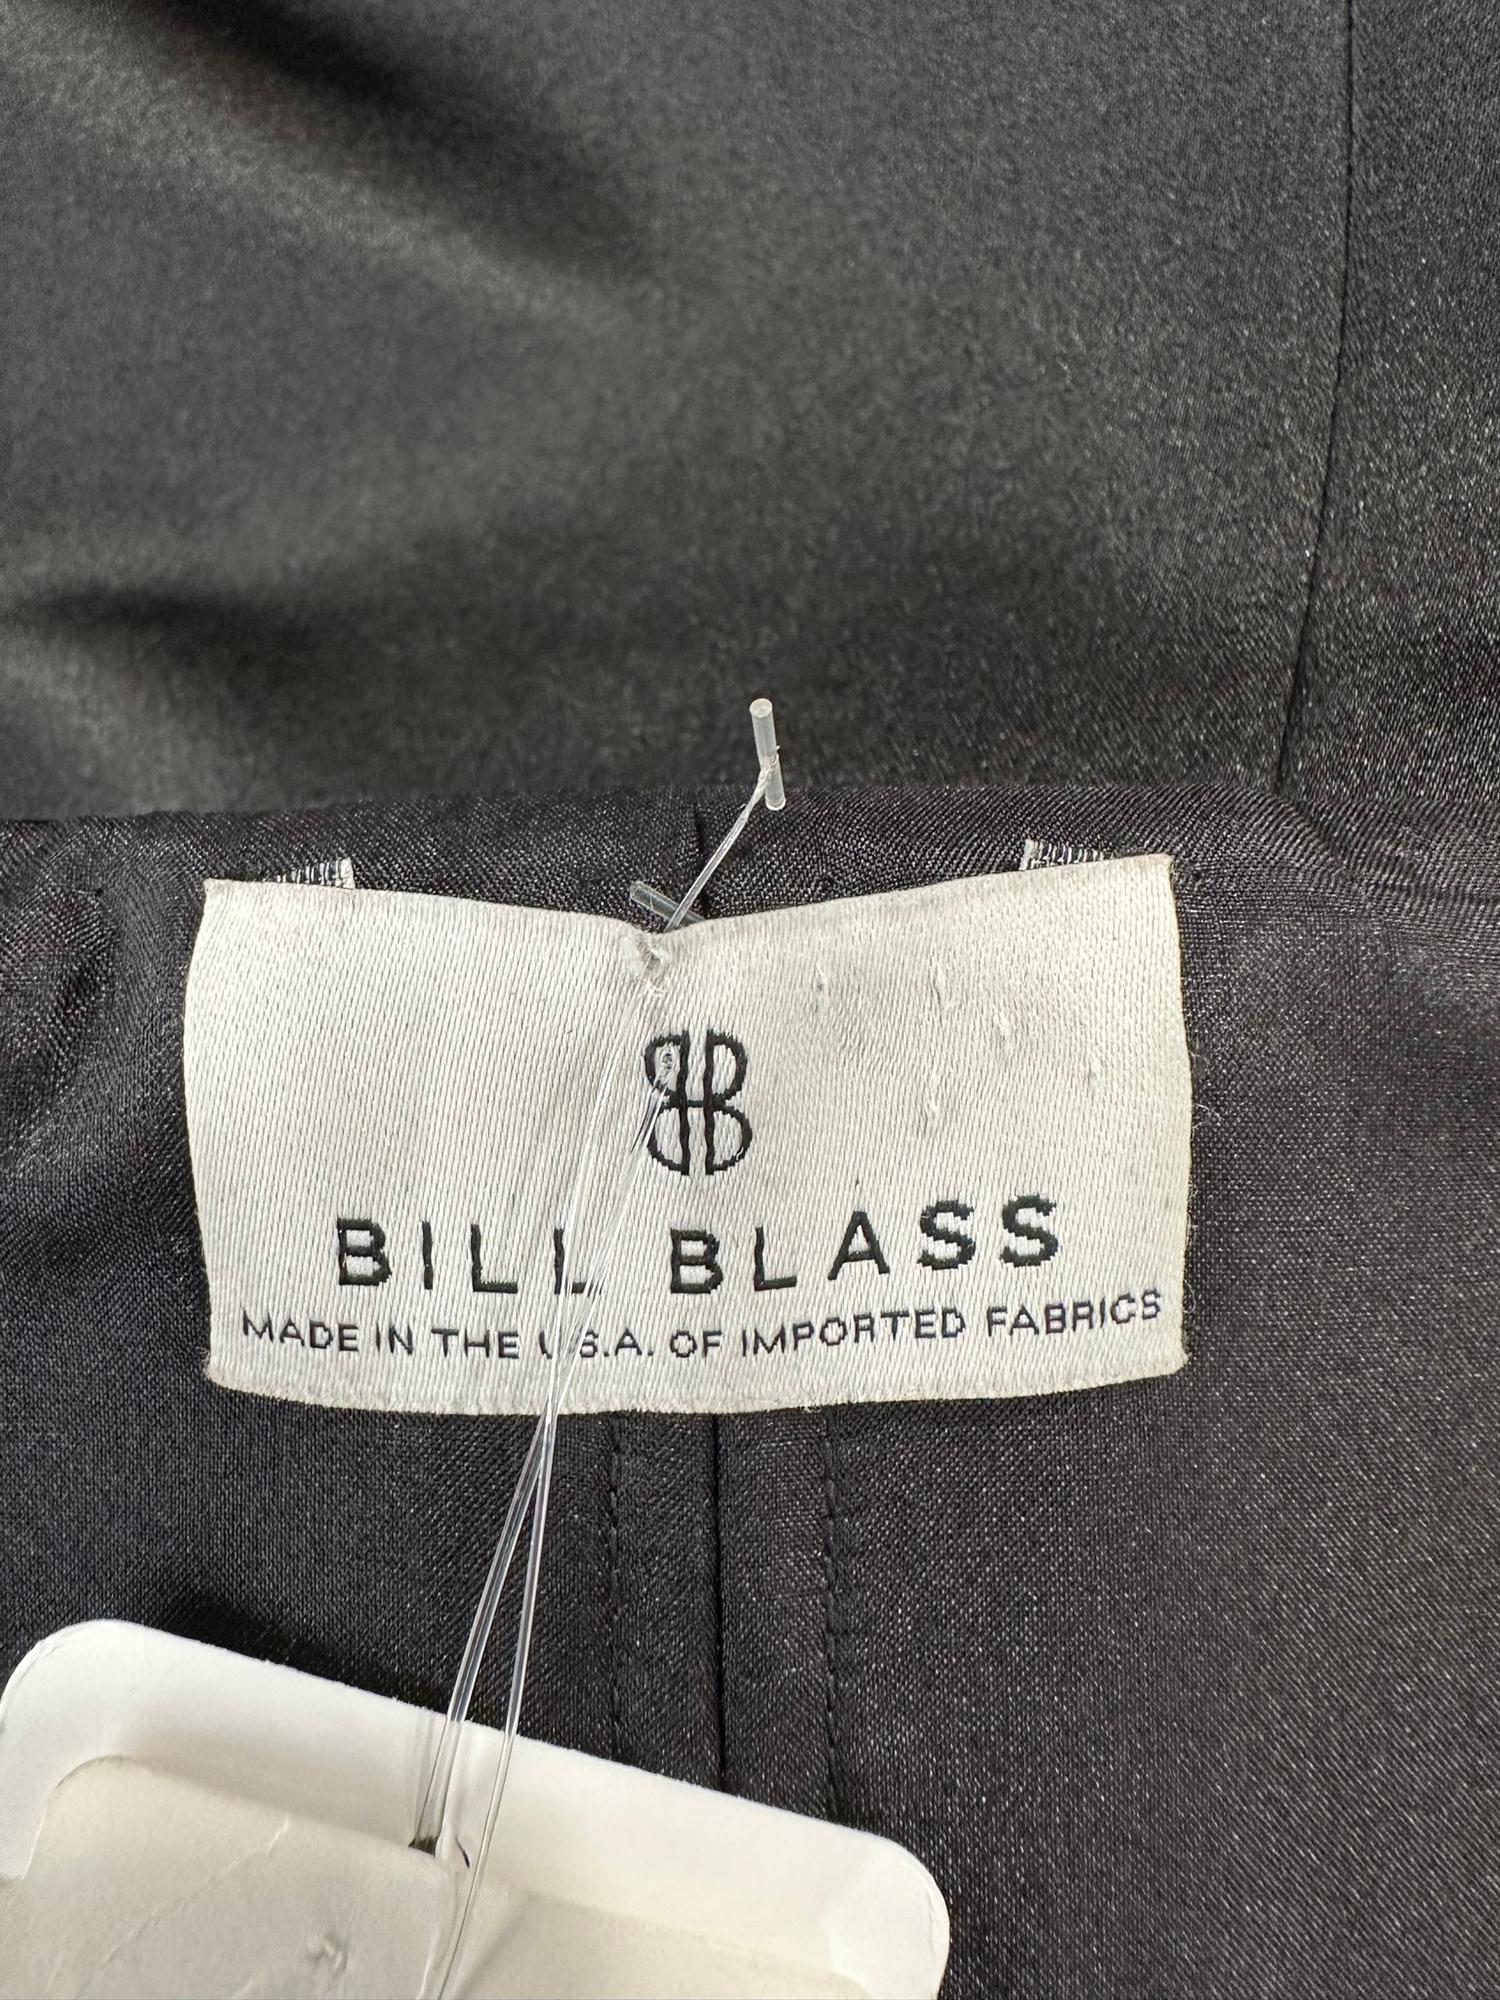 Bill Blass Black Silk Satin Strapless Cocktail Dress with Tailored Ruffles 2 For Sale 11